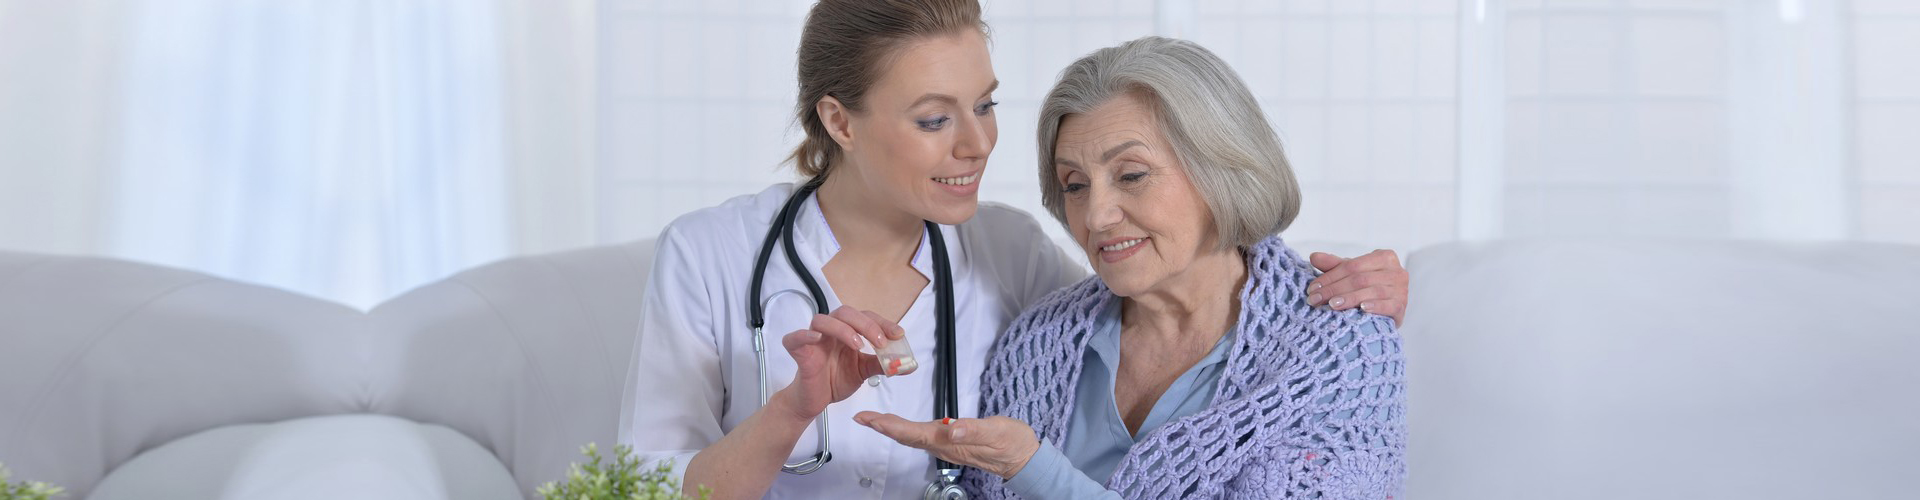 woman give elderly woman a medicine